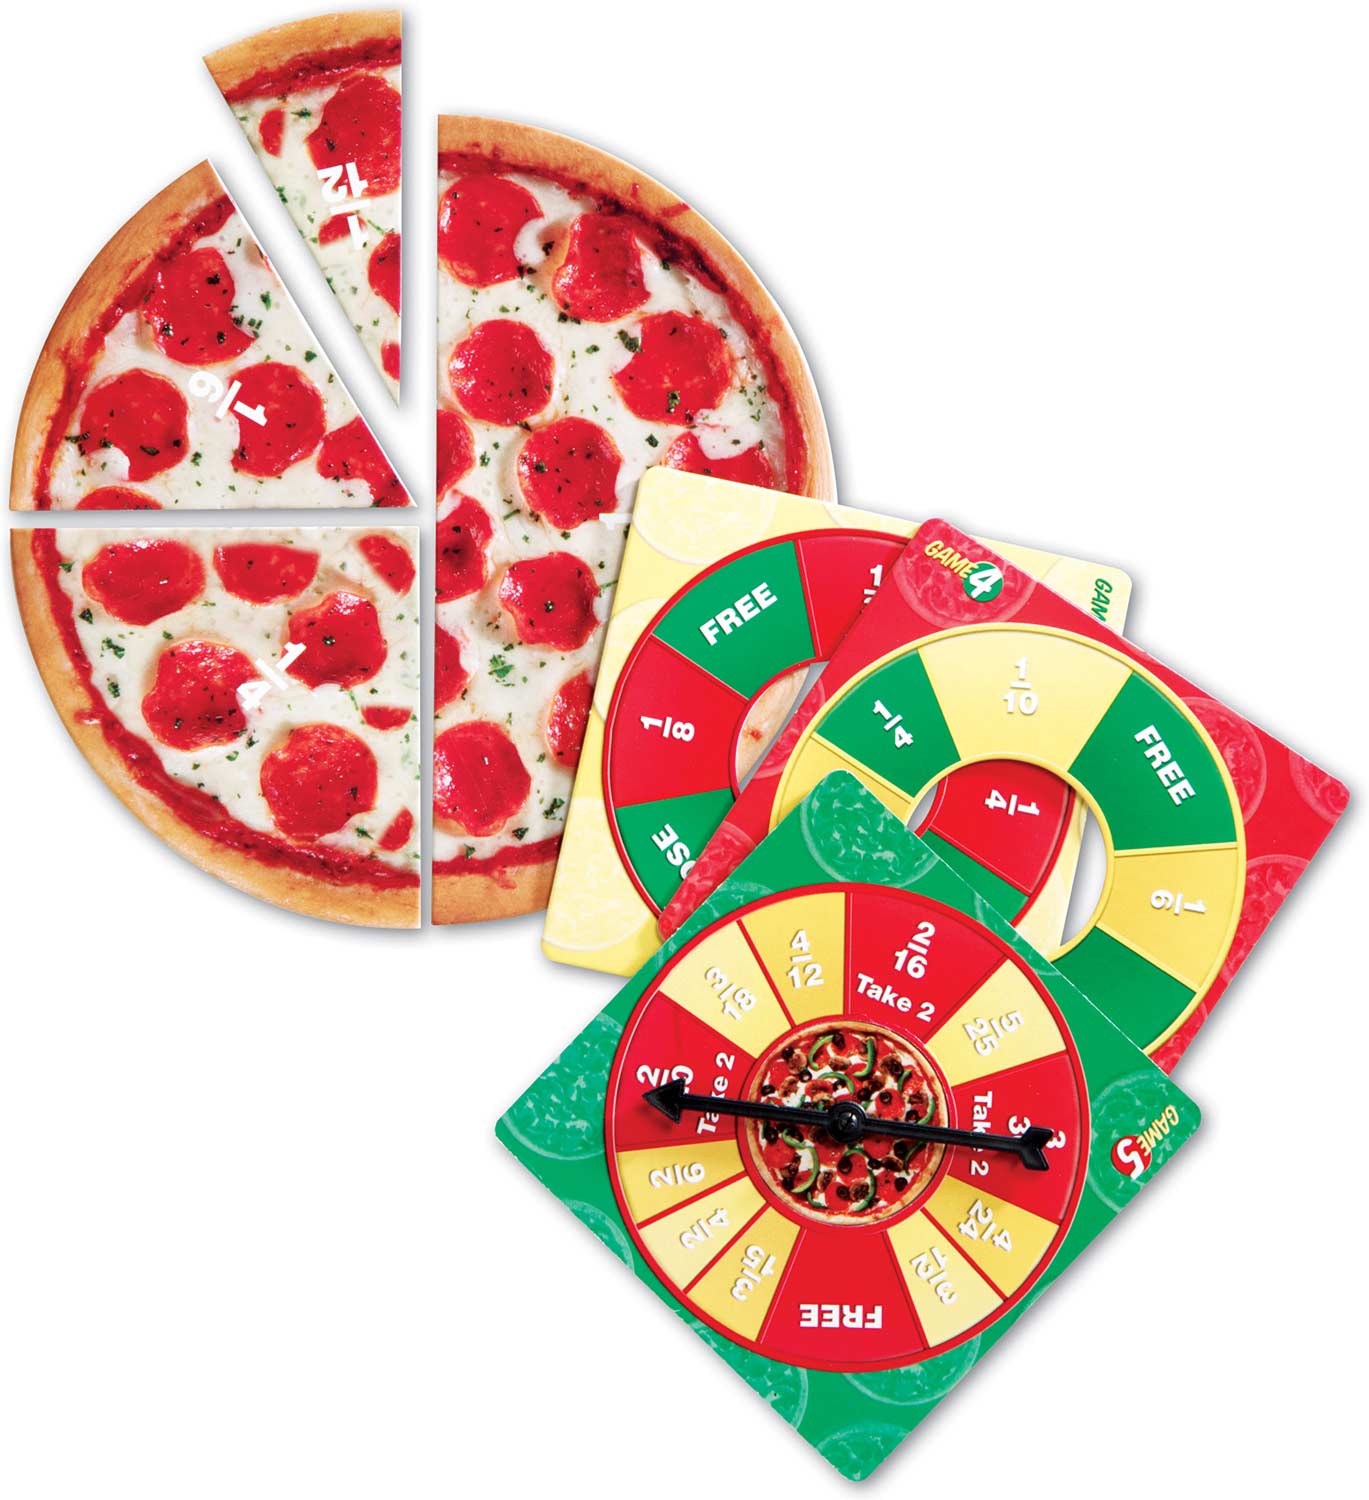 pizza-fraction-fun-junior-toys-2-learn